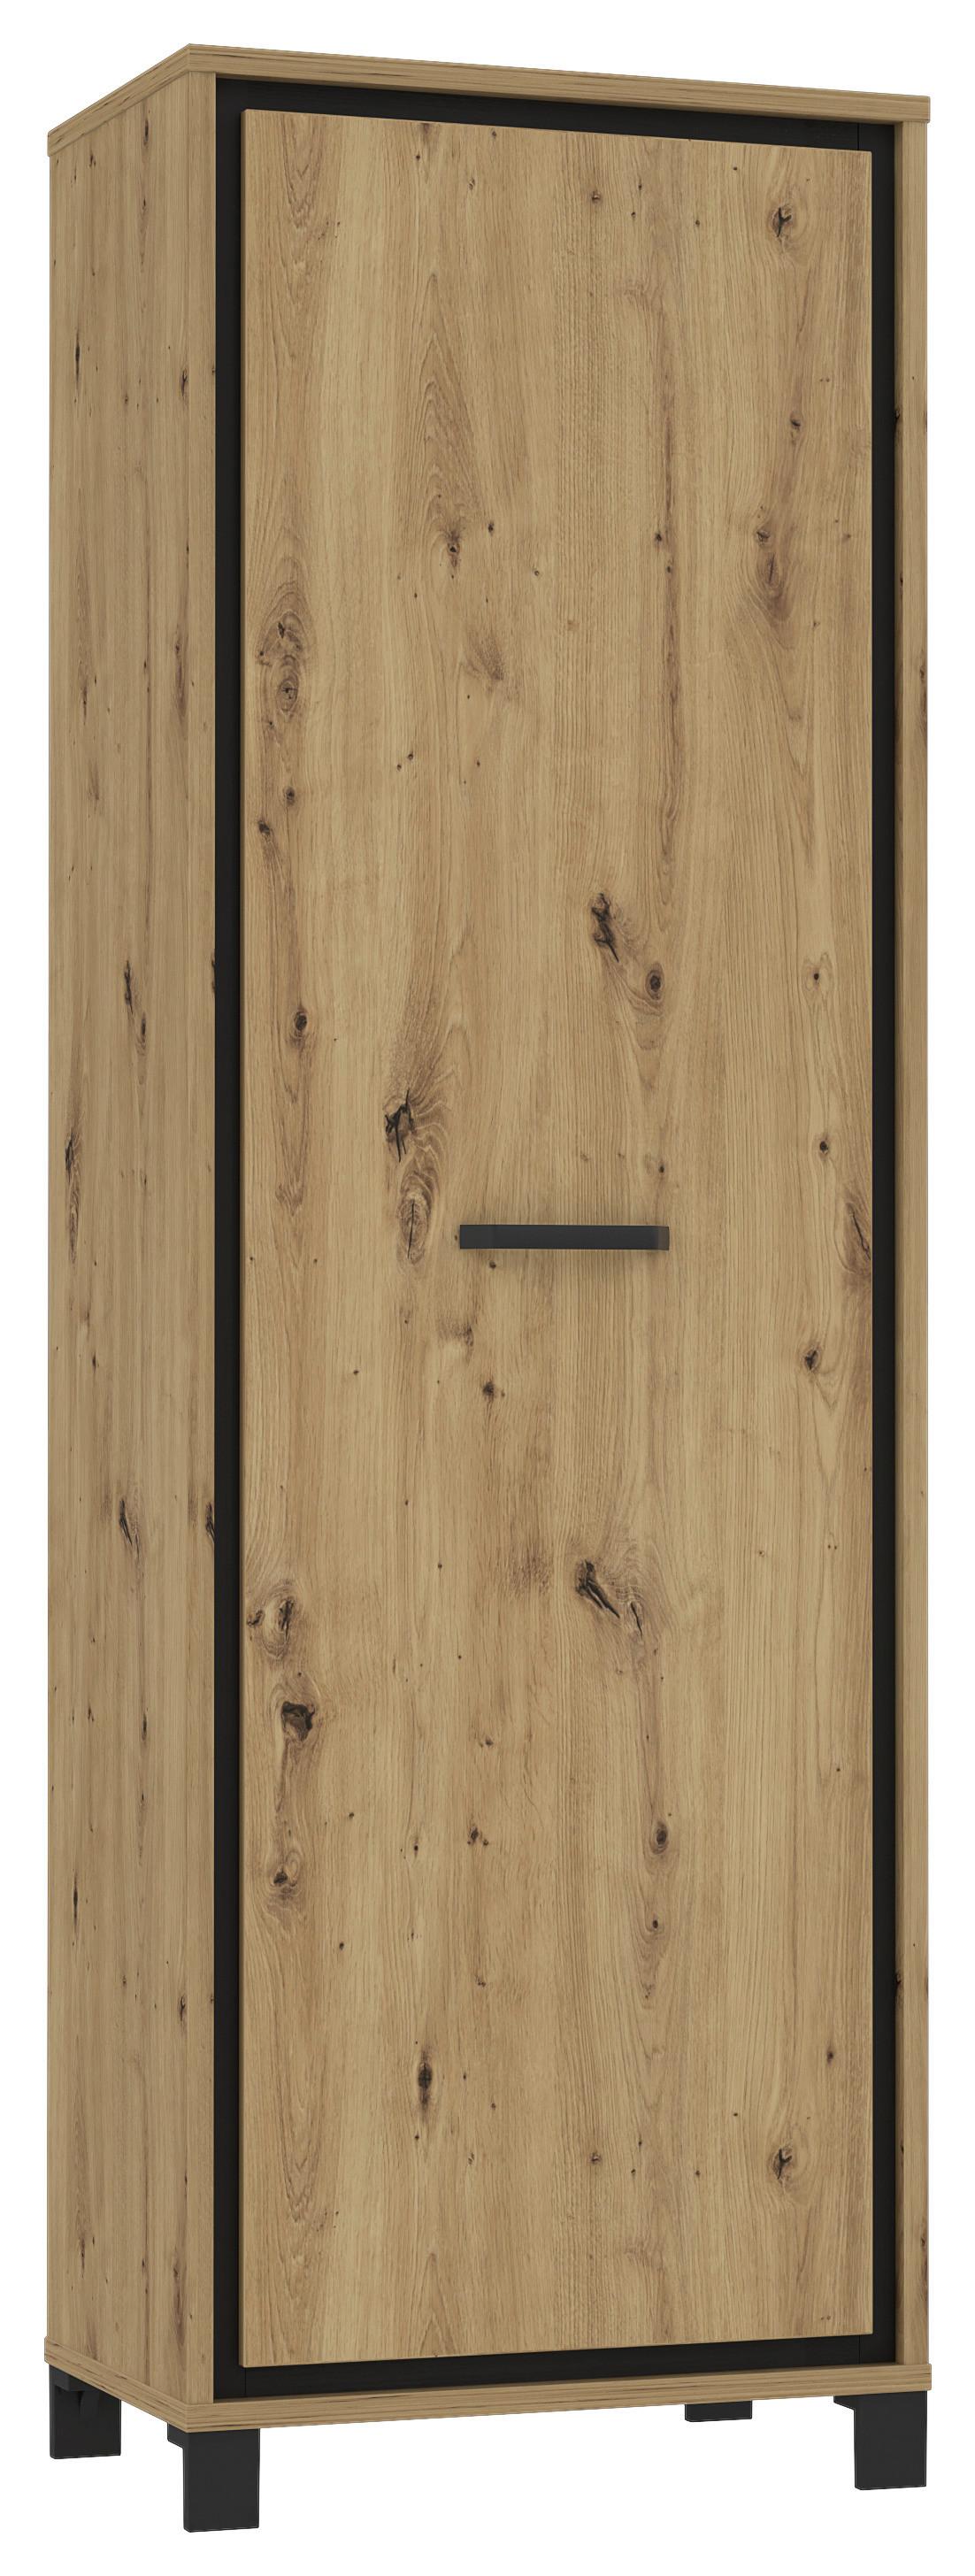 Skříň Na Oděv Trondheim Dekor Dub - černá/barvy dubu, Basics, kov/kompozitní dřevo (64,4/199,4/41,5cm) - Livetastic